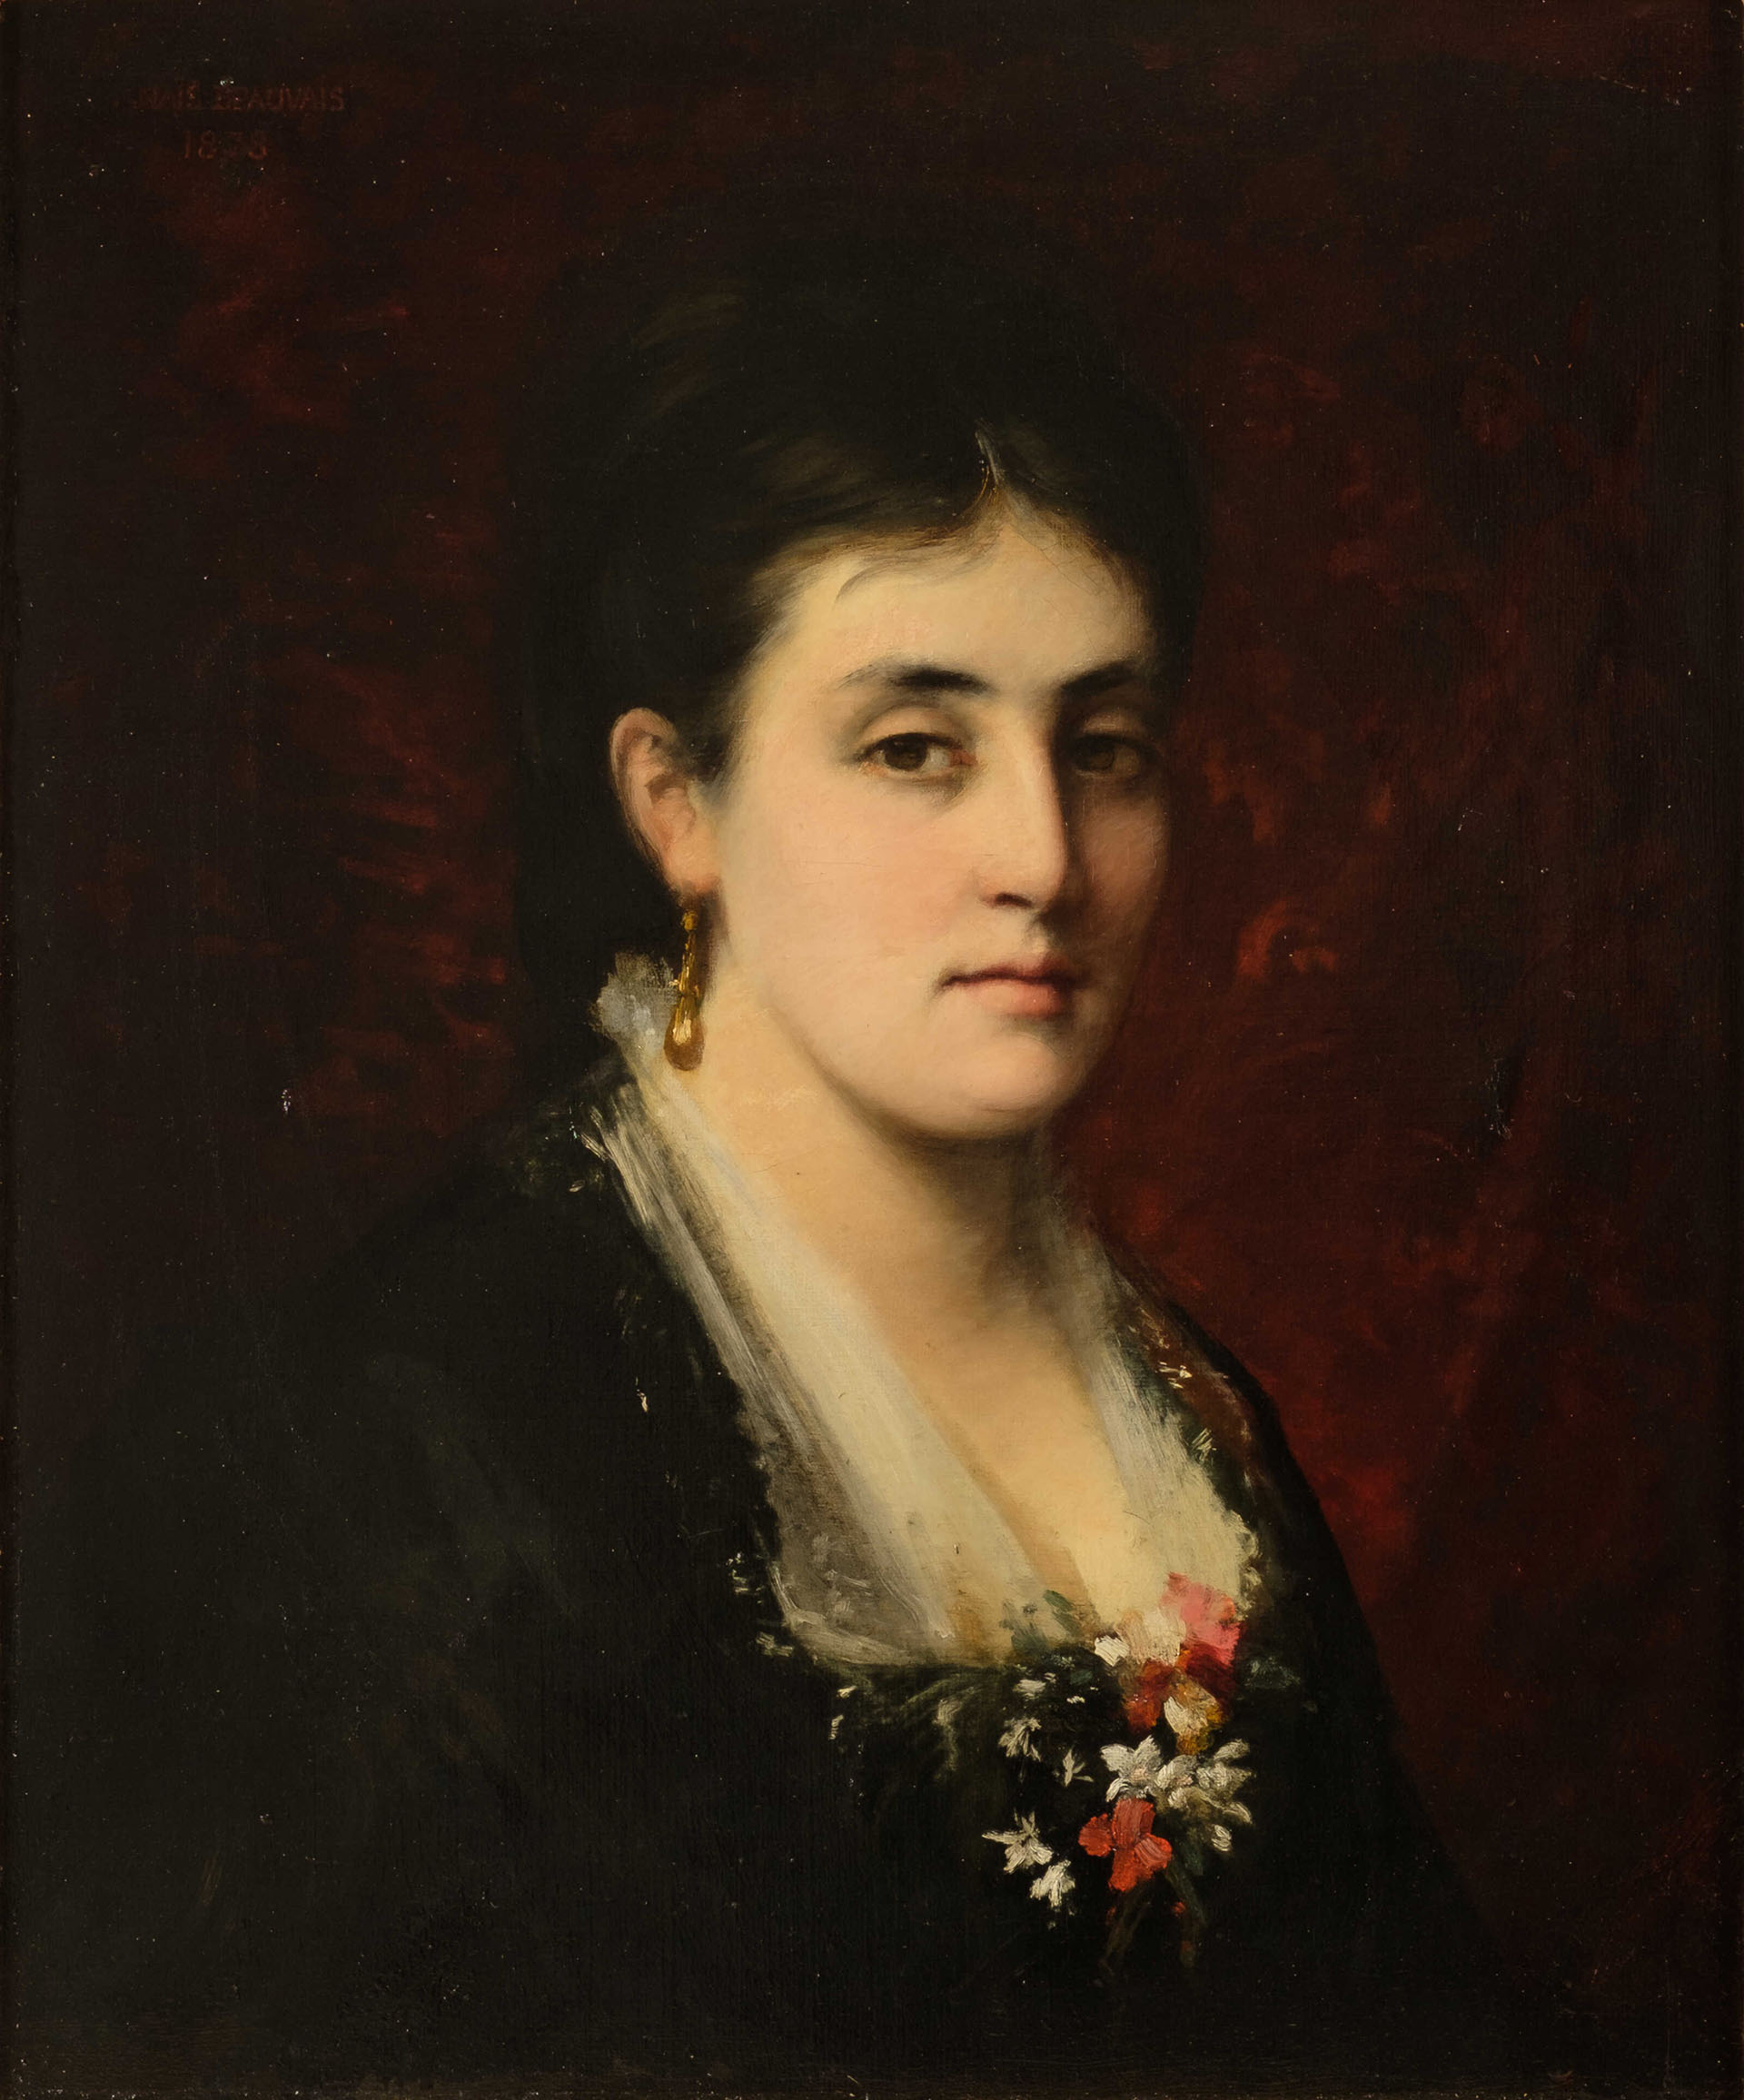 Jeanne Weil, la madre de Proust, en 1880, pintada por Beauvais. Retrato hallado en la colección del Museo Marcel Proust. (Fine Art Images/Heritage Images vía Getty Images)